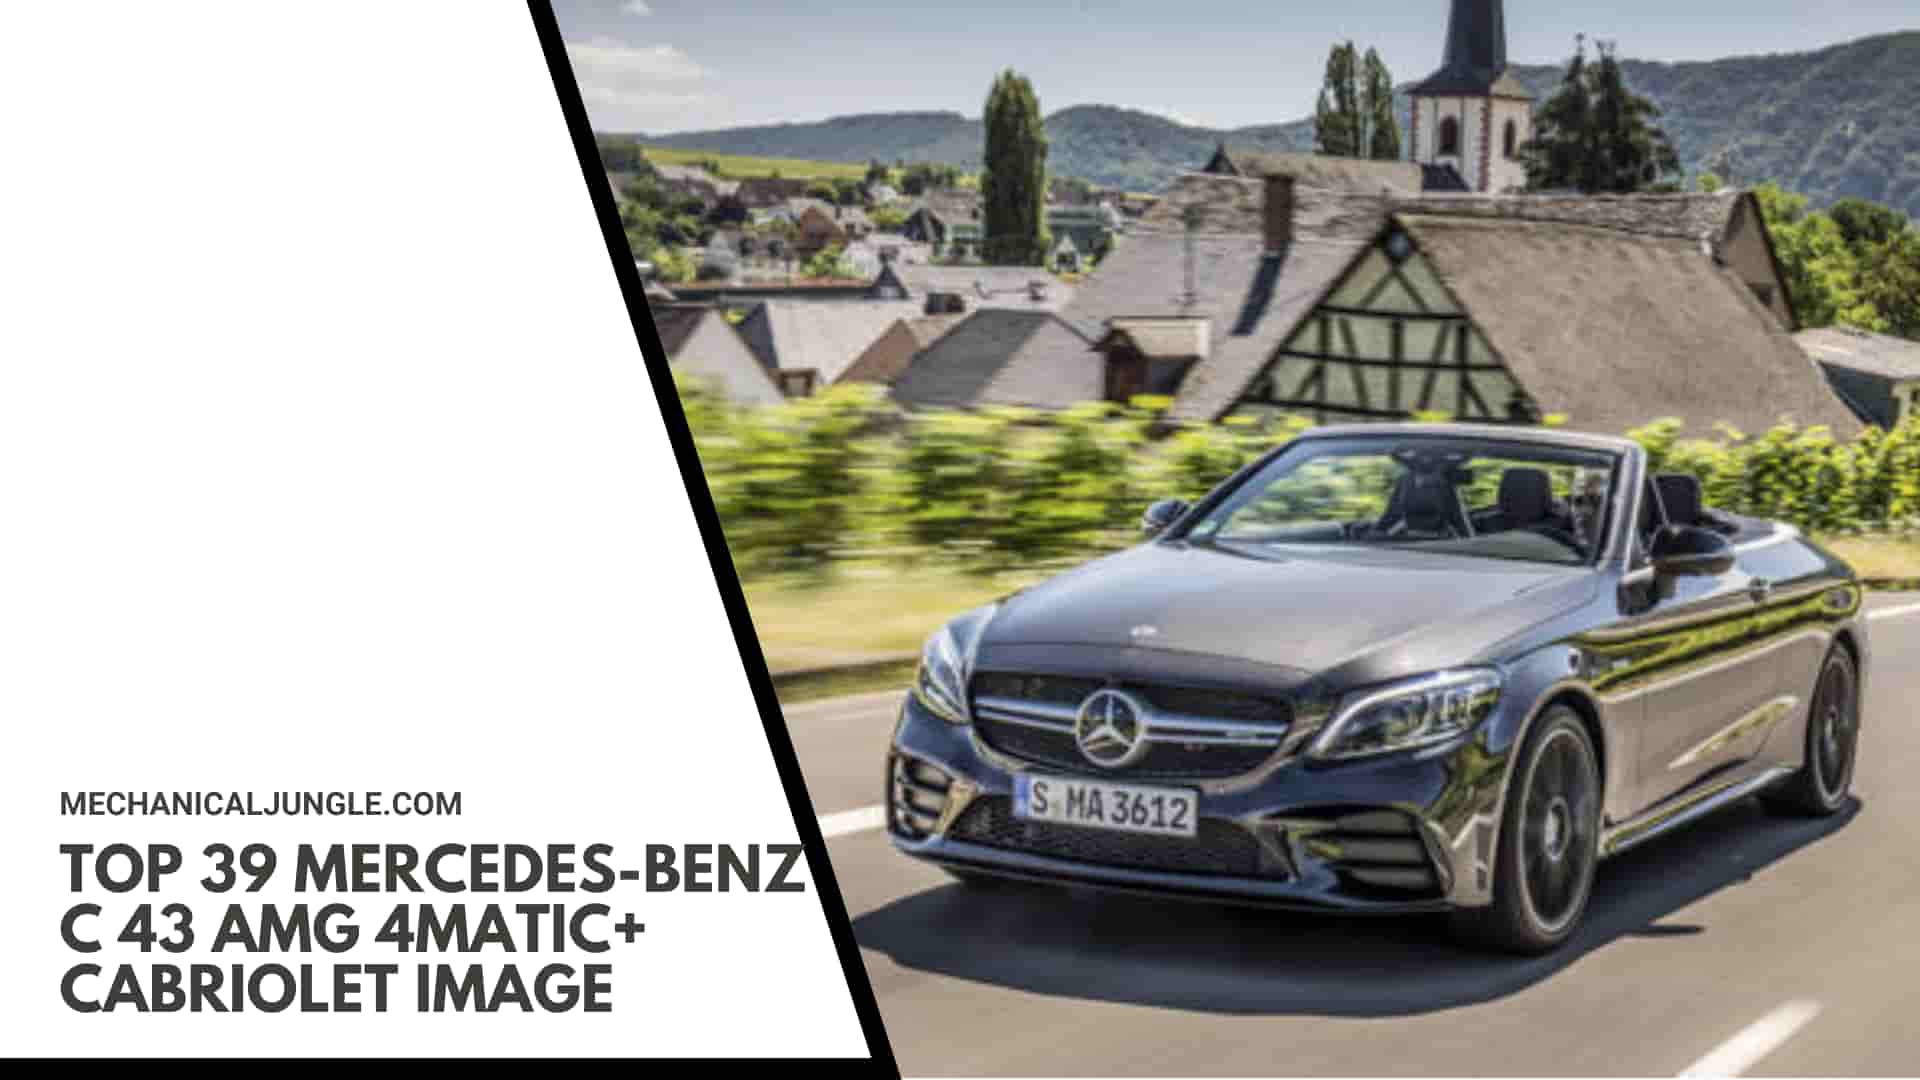 Top 39 Mercedes-Benz C 43 AMG 4MATIC+ Cabriolet Image